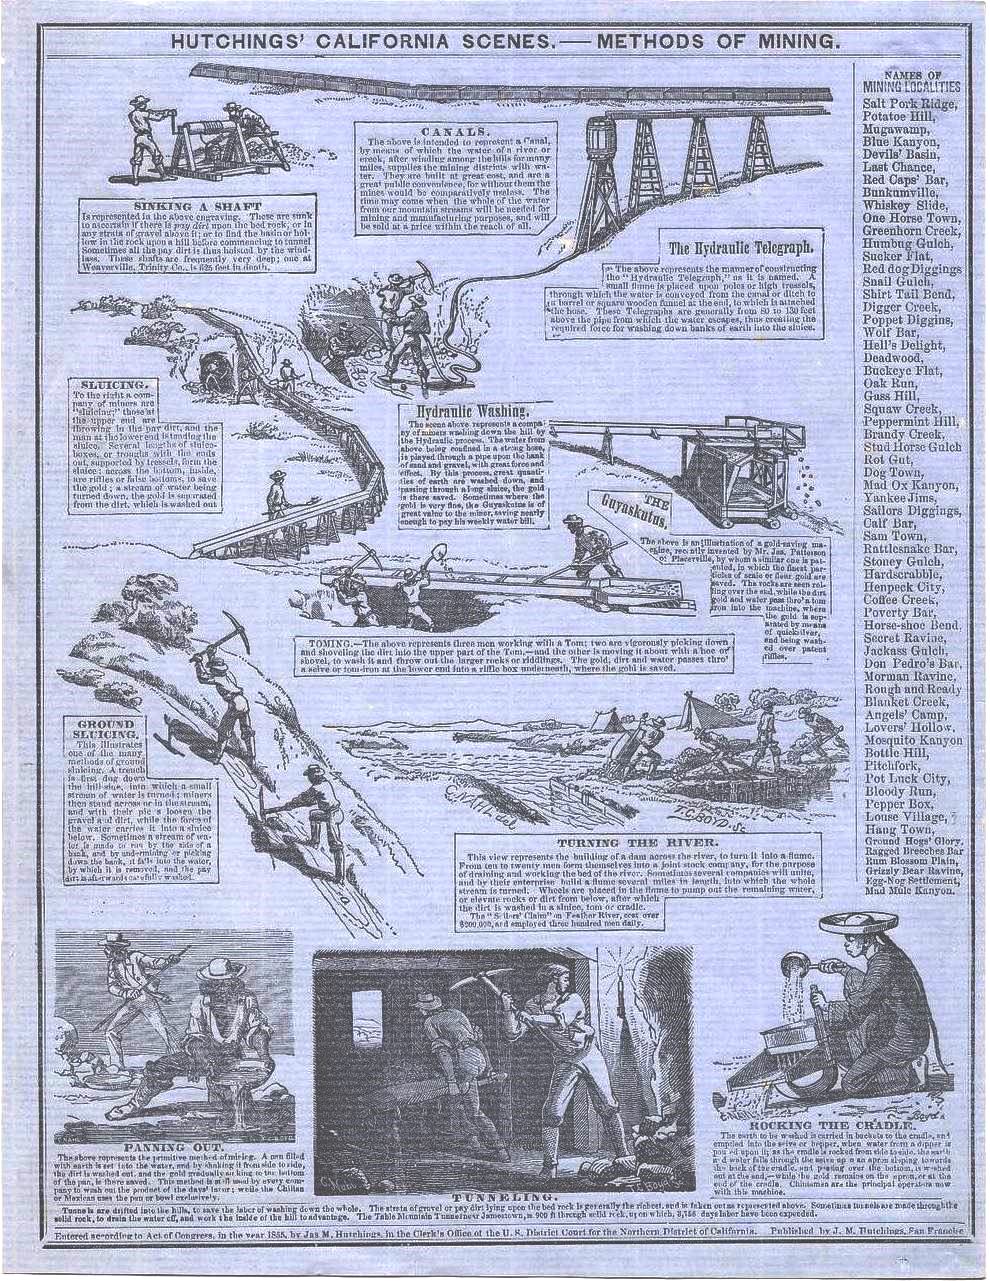 Methods of Mining circa 1855, James Mason Hutchings